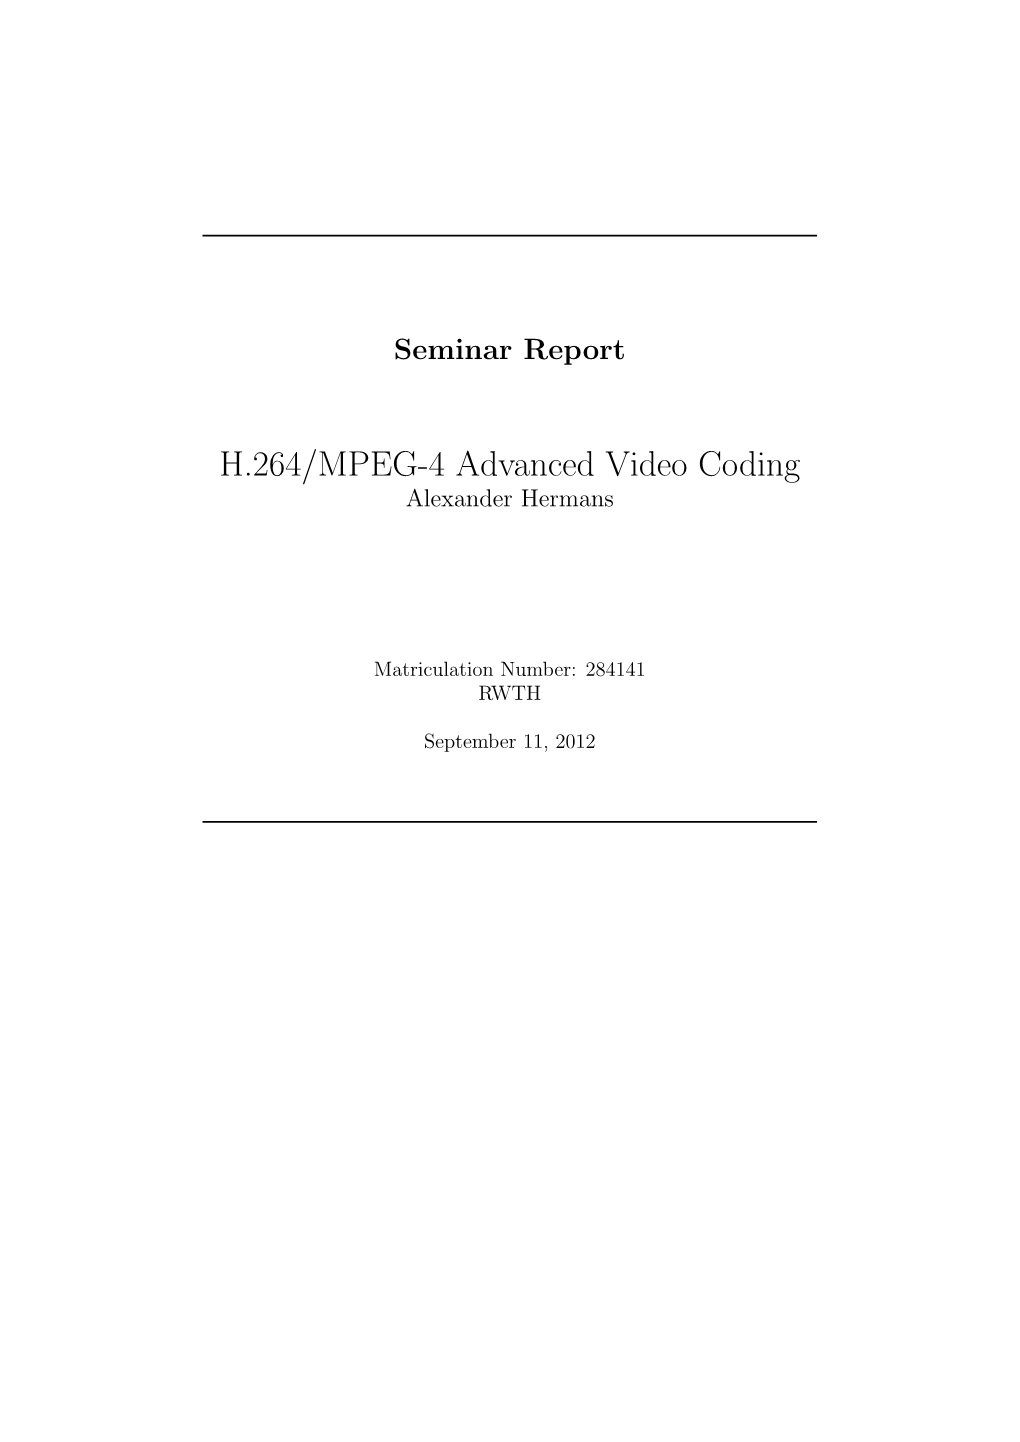 H.264/MPEG-4 Advanced Video Coding Alexander Hermans